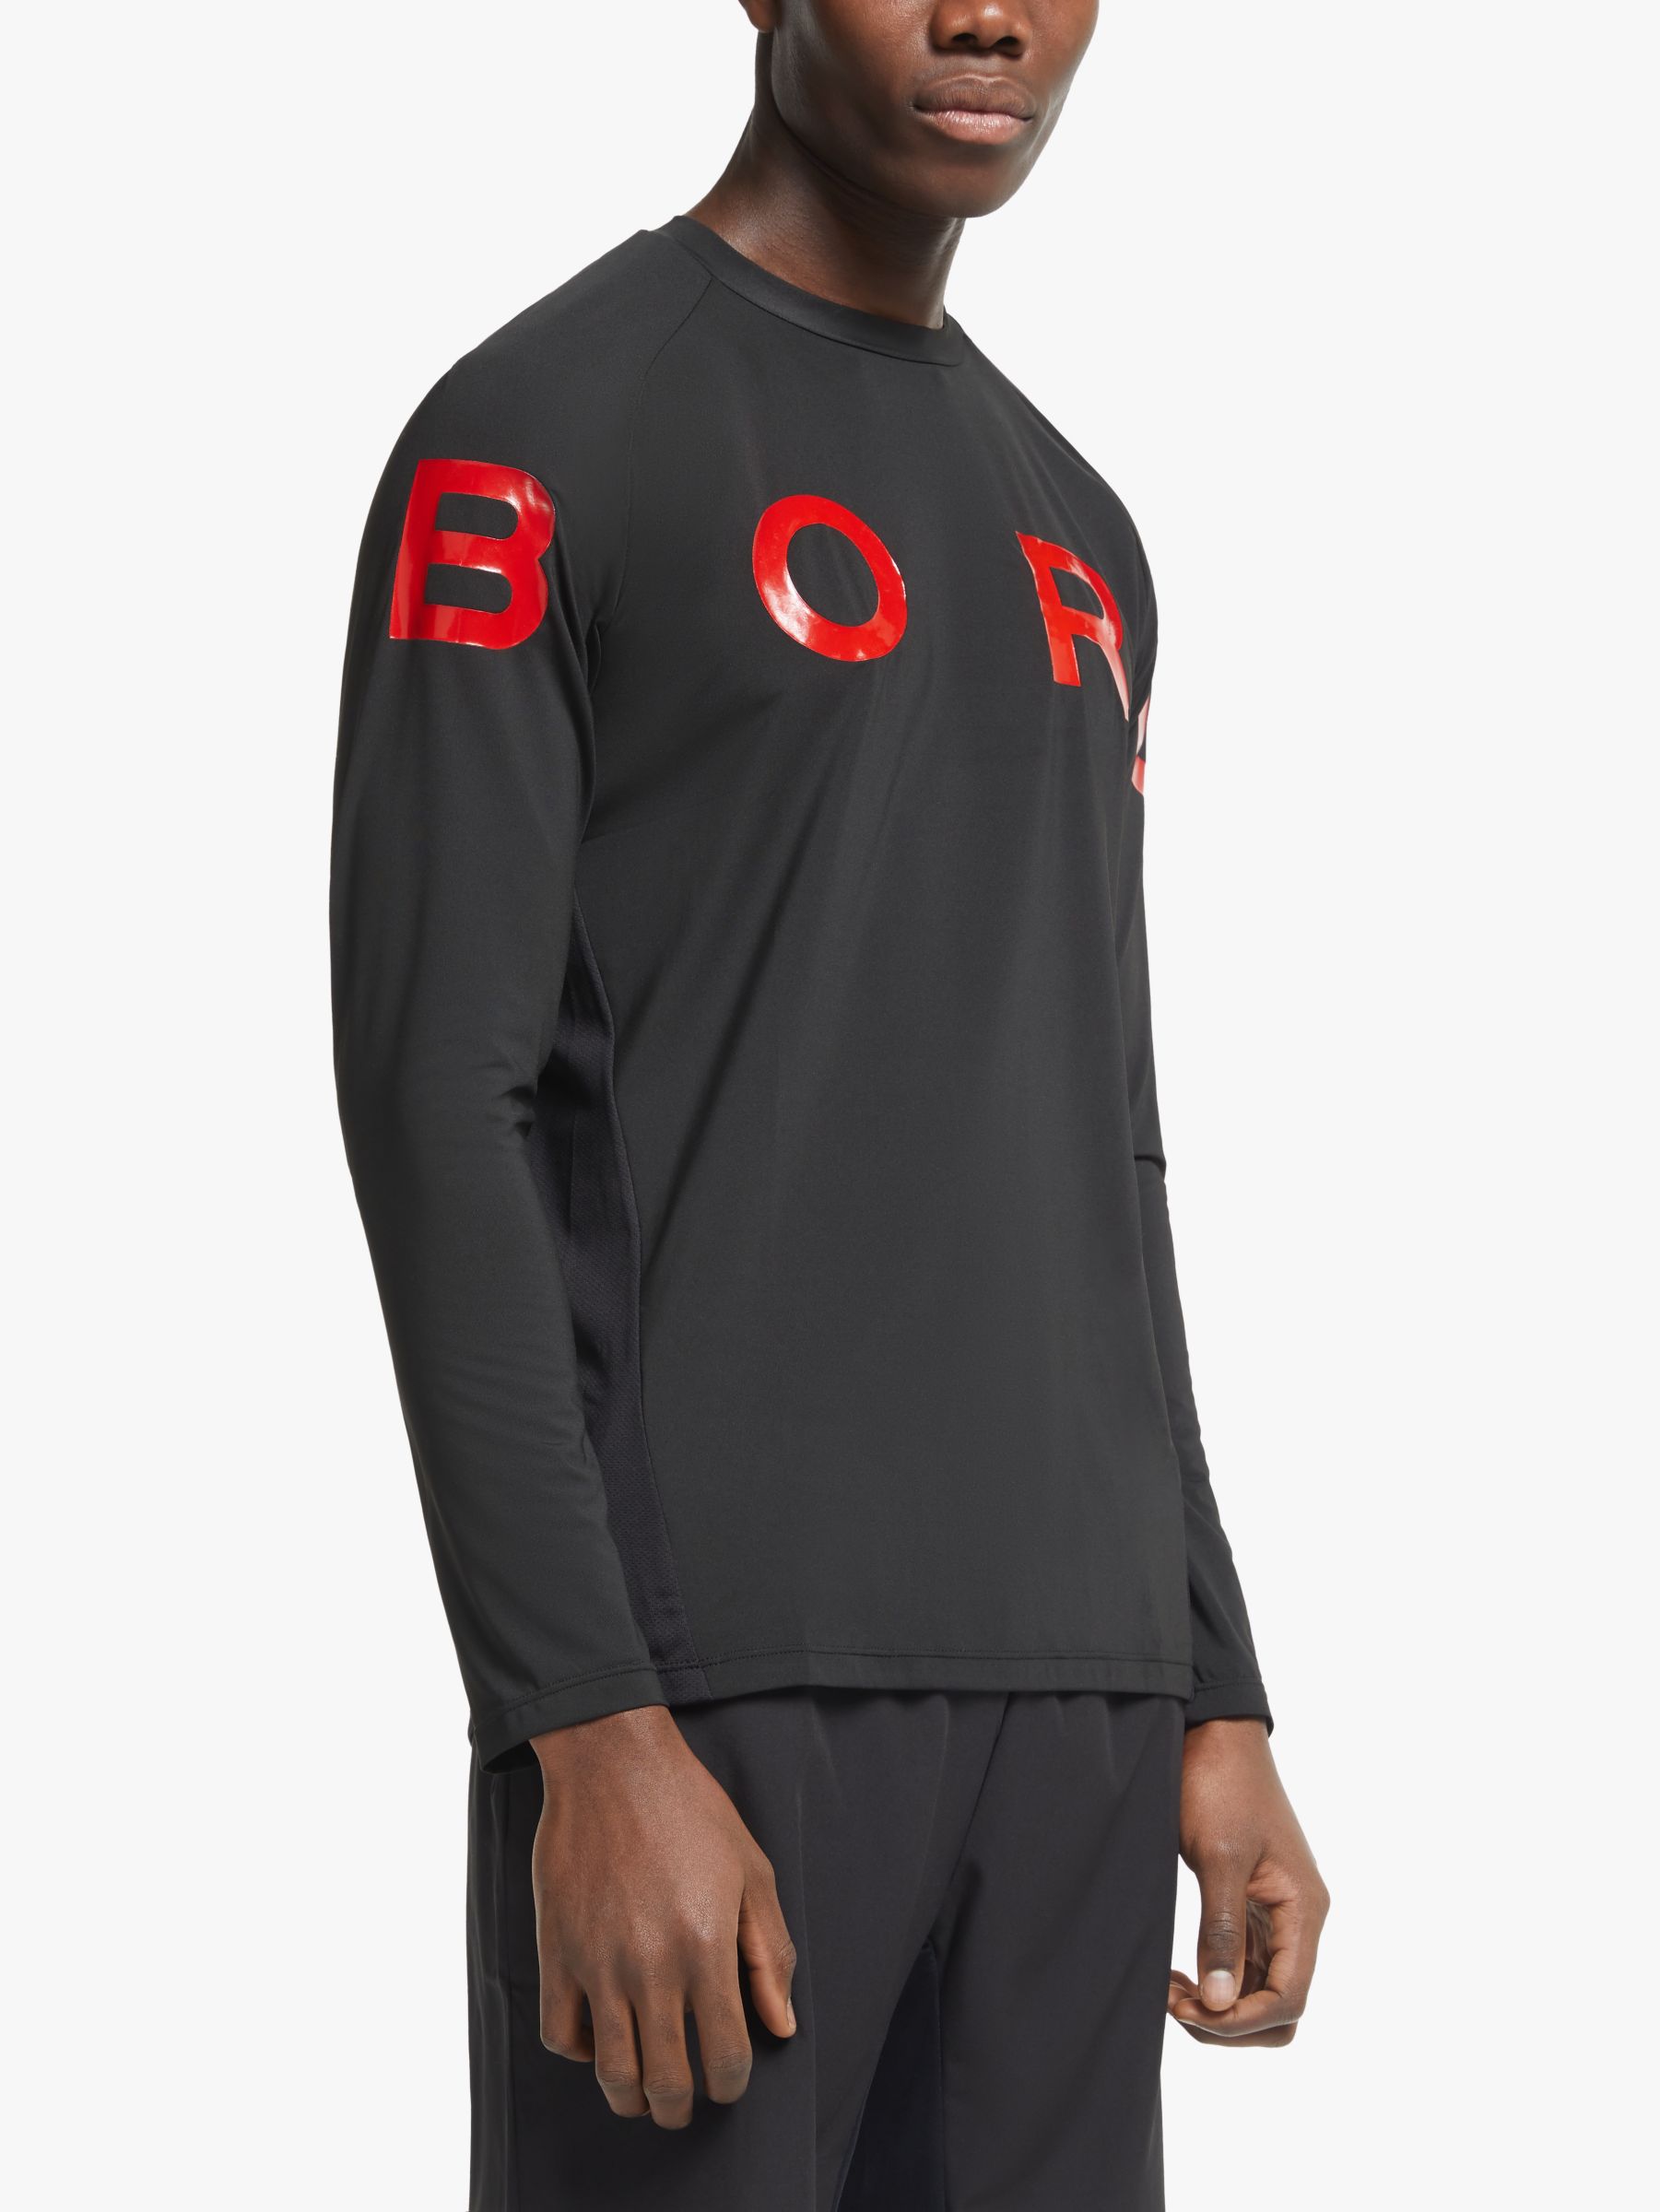 Björn Borg Ante Long Sleeve Training Top, Black/Red